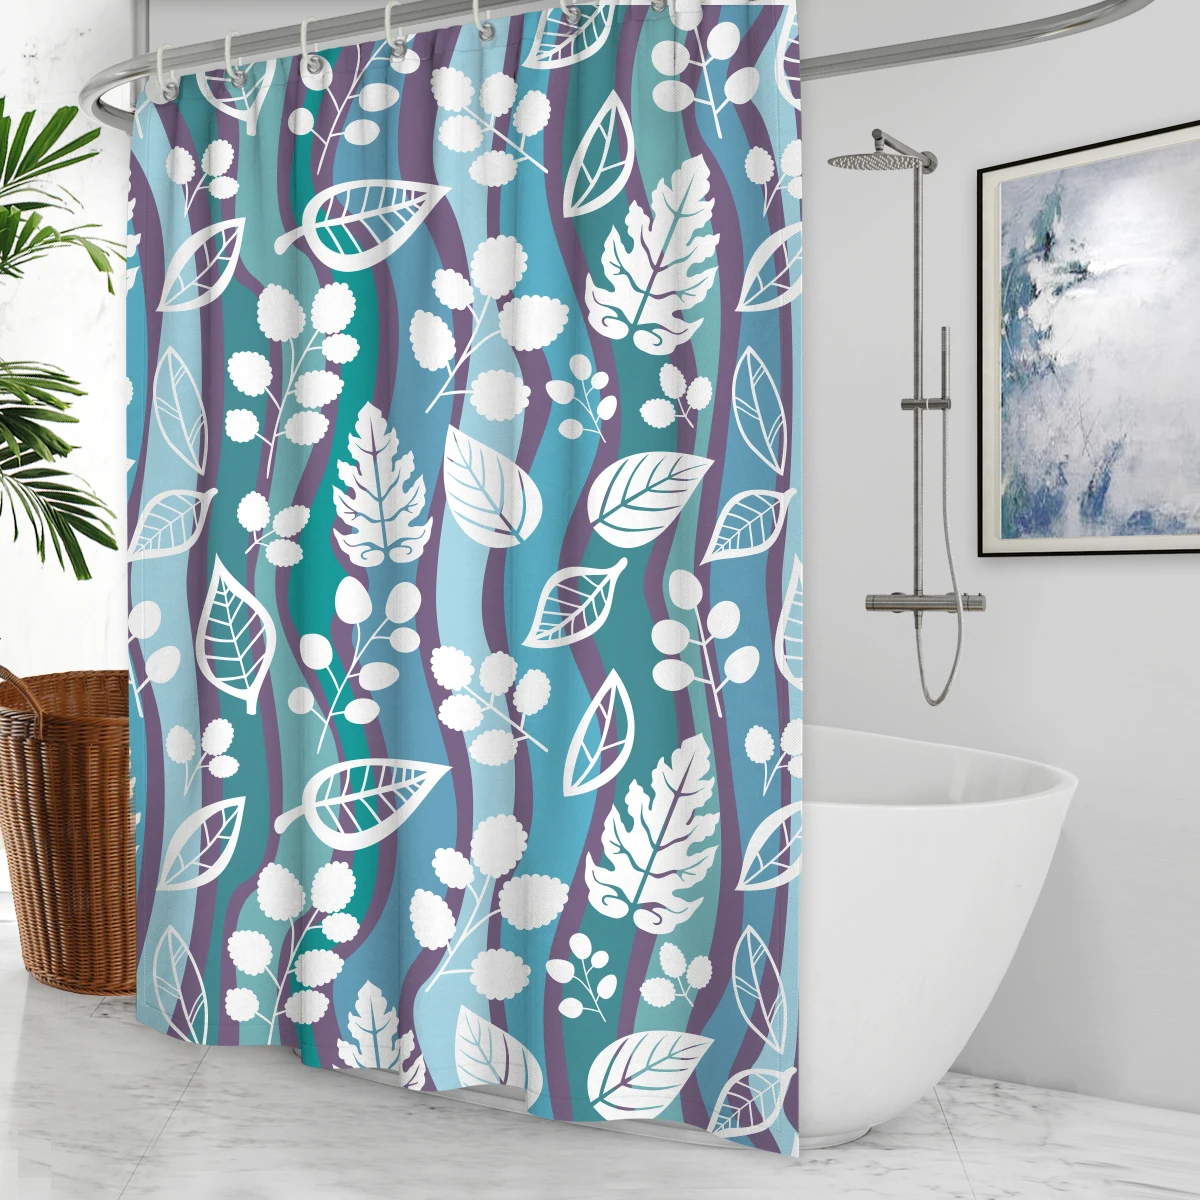 

Wtisan Floral Shower Curtains Leaf Theme Bathroom Tropical Waterproof Fabric With Plastic Hooks Art Decortive Bathtub Curtains